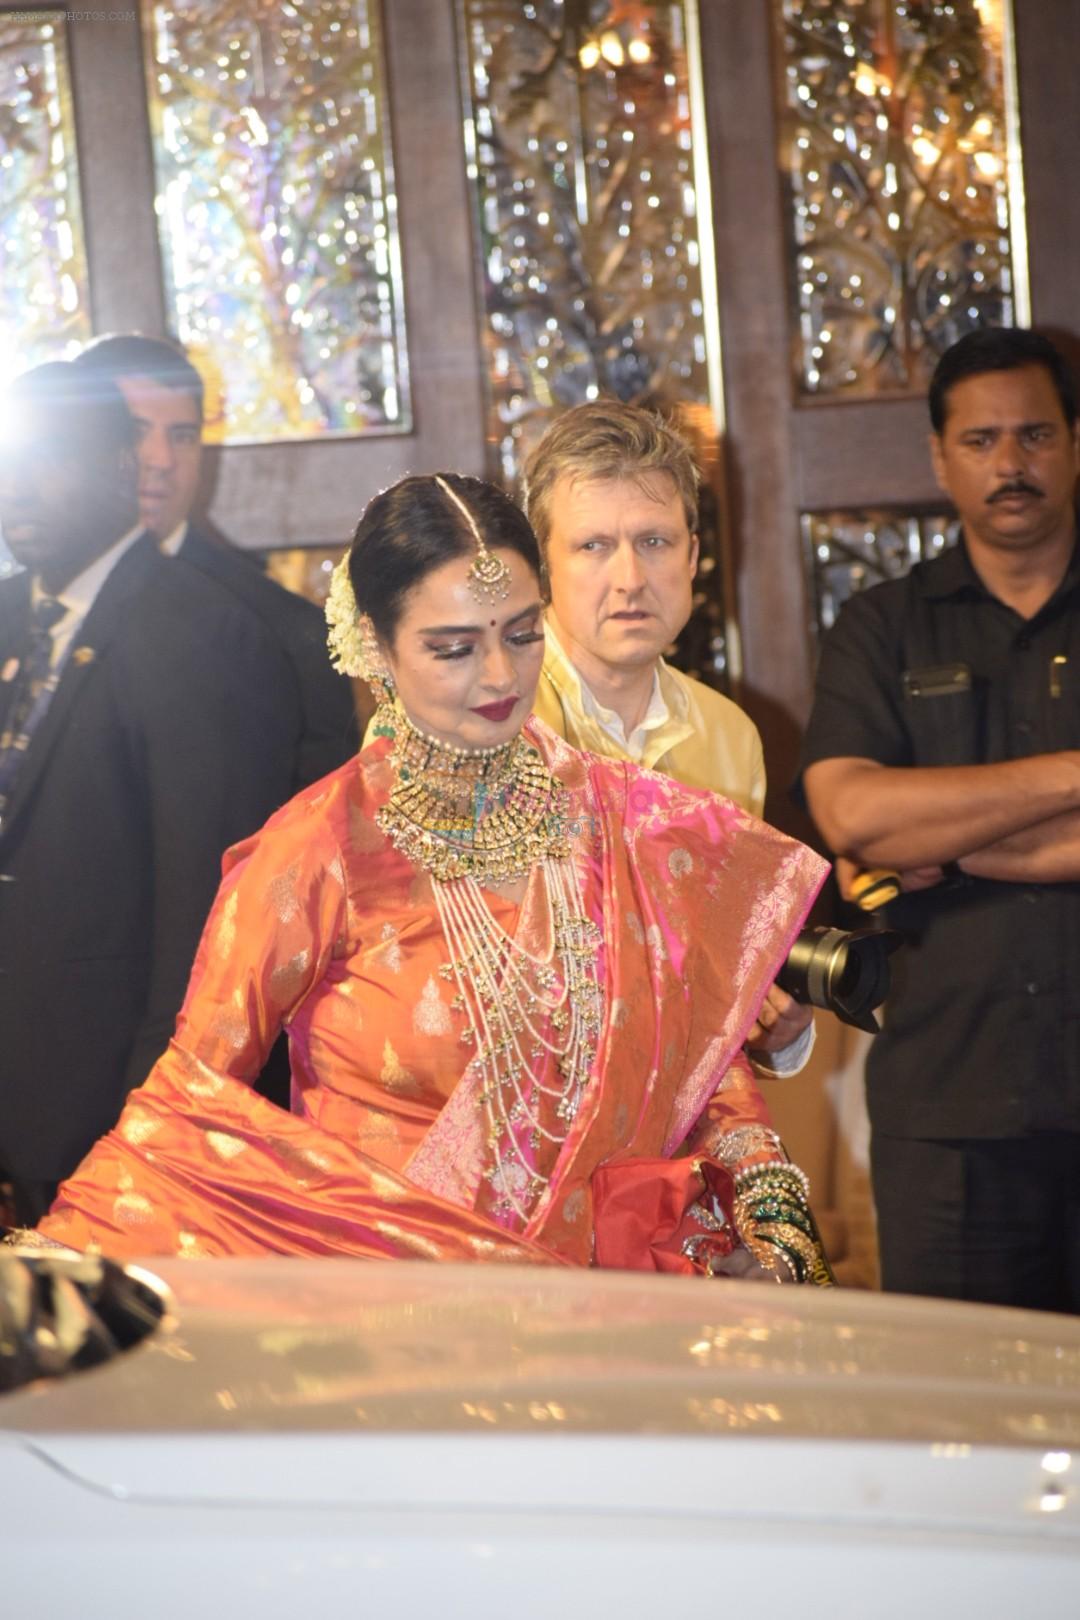 Rekha at Isha Ambani and Anand Piramal's wedding on 12th Dec 2018